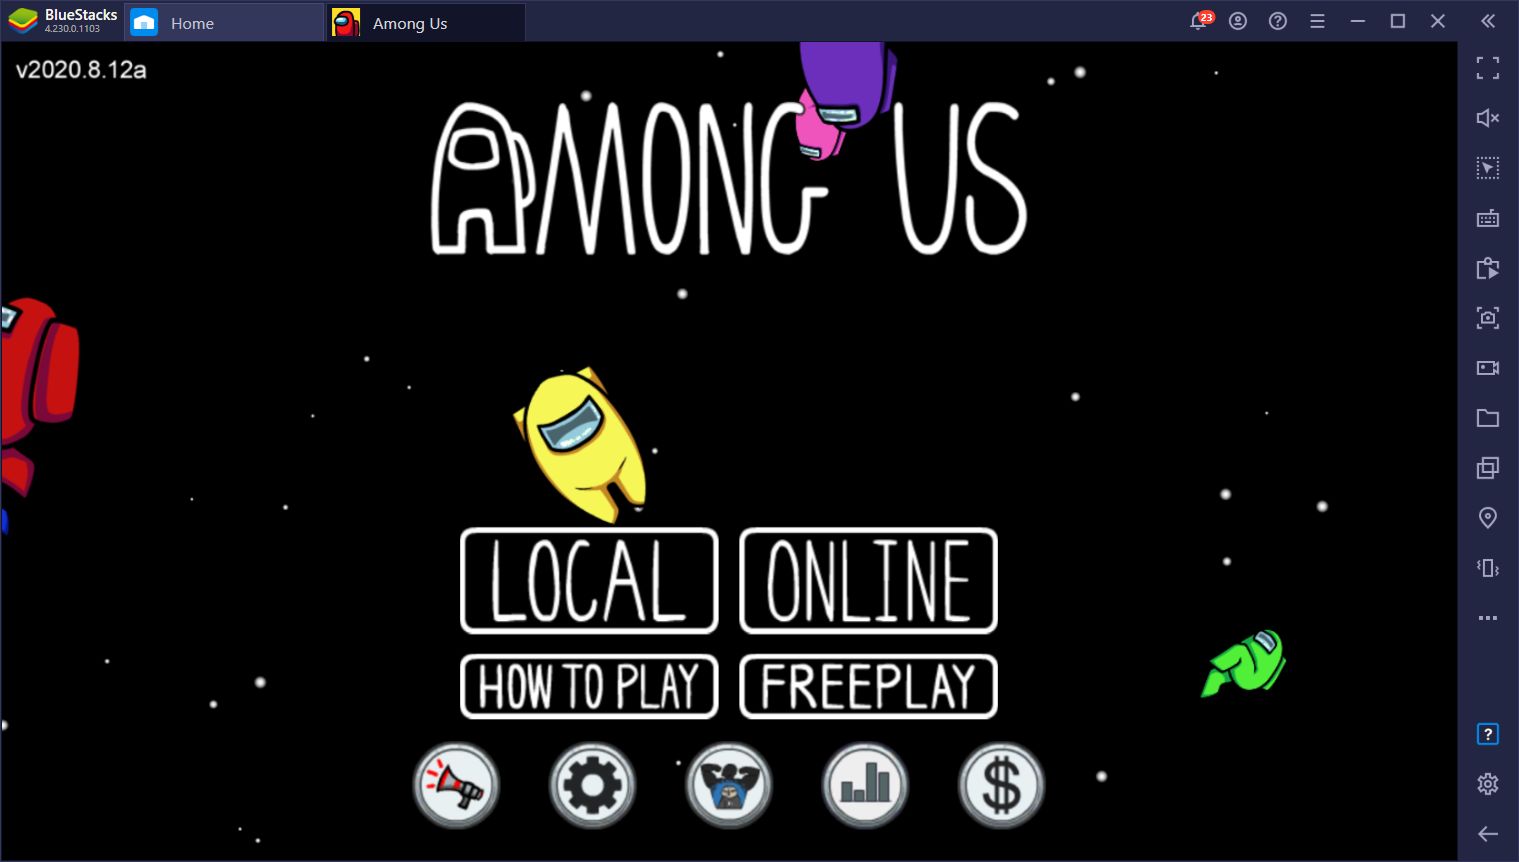 AMONG US: IMPOSTOR KING ONLINE free online game on